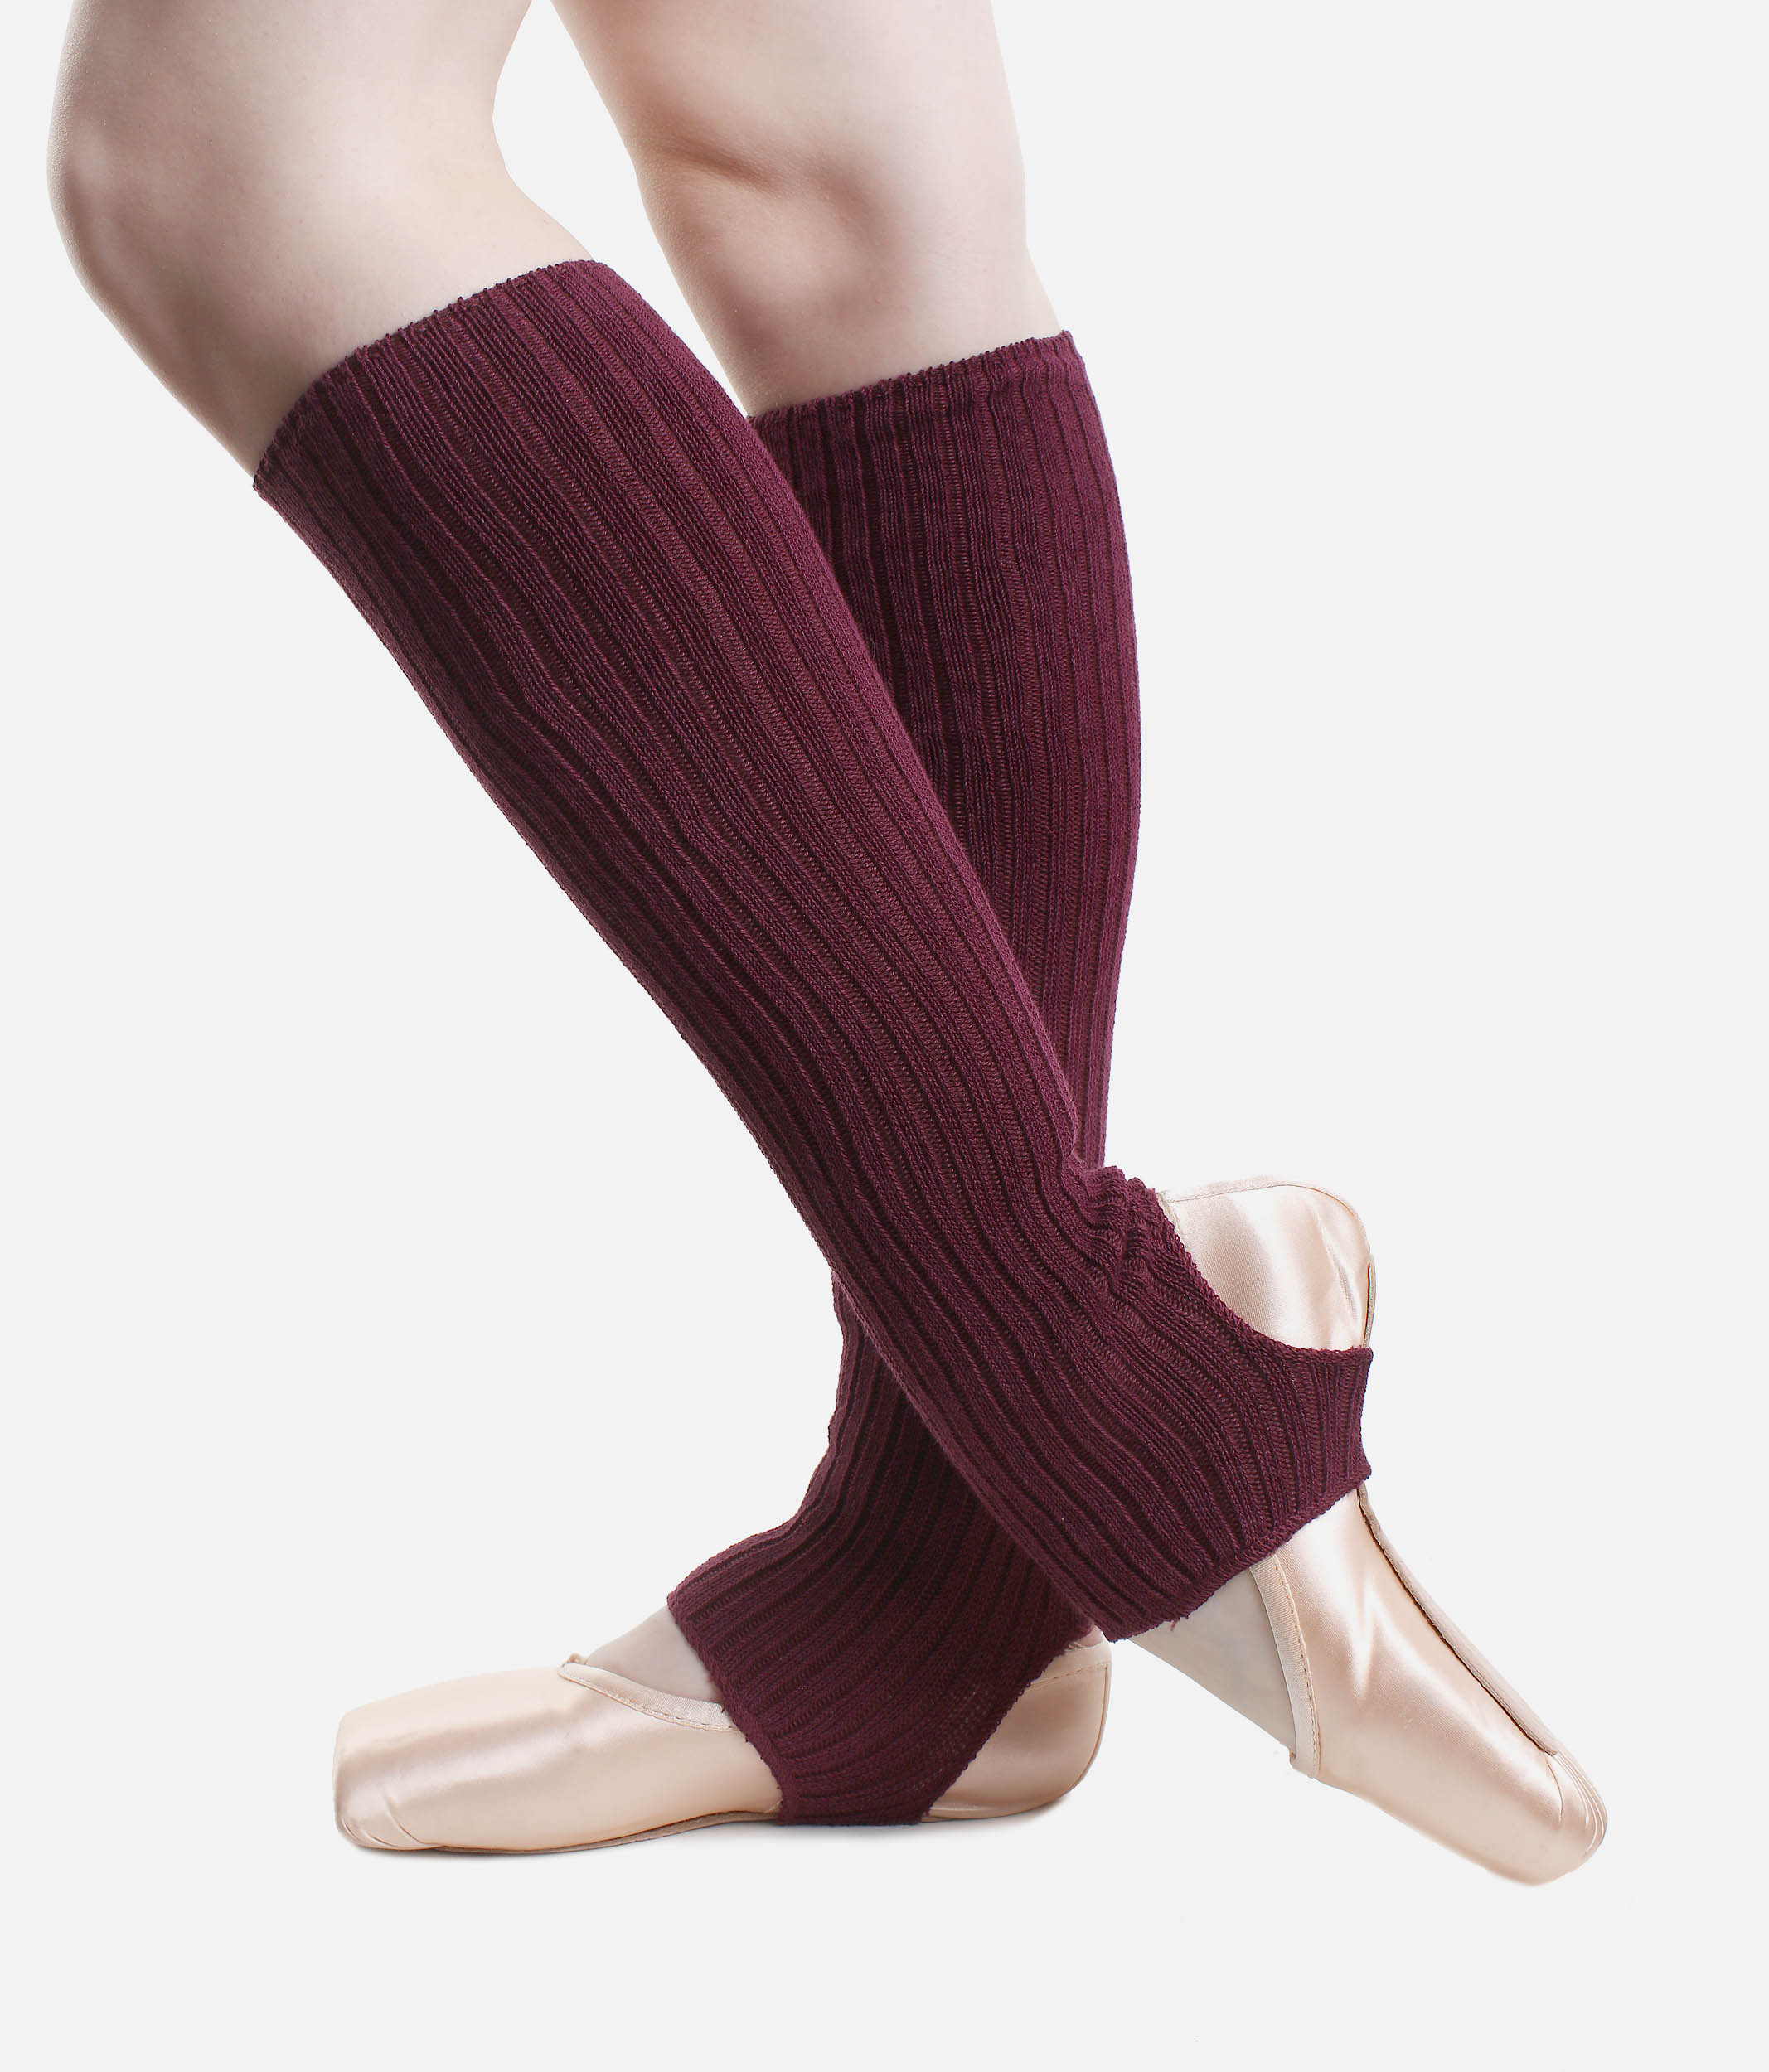 Long Leg Warmers Women's, Knit Long, Striped Leg Warmers for Teenage Girls,  Women, Colorful, Bright Striped Leg Warmer, Bright Leg Warmers -  Canada